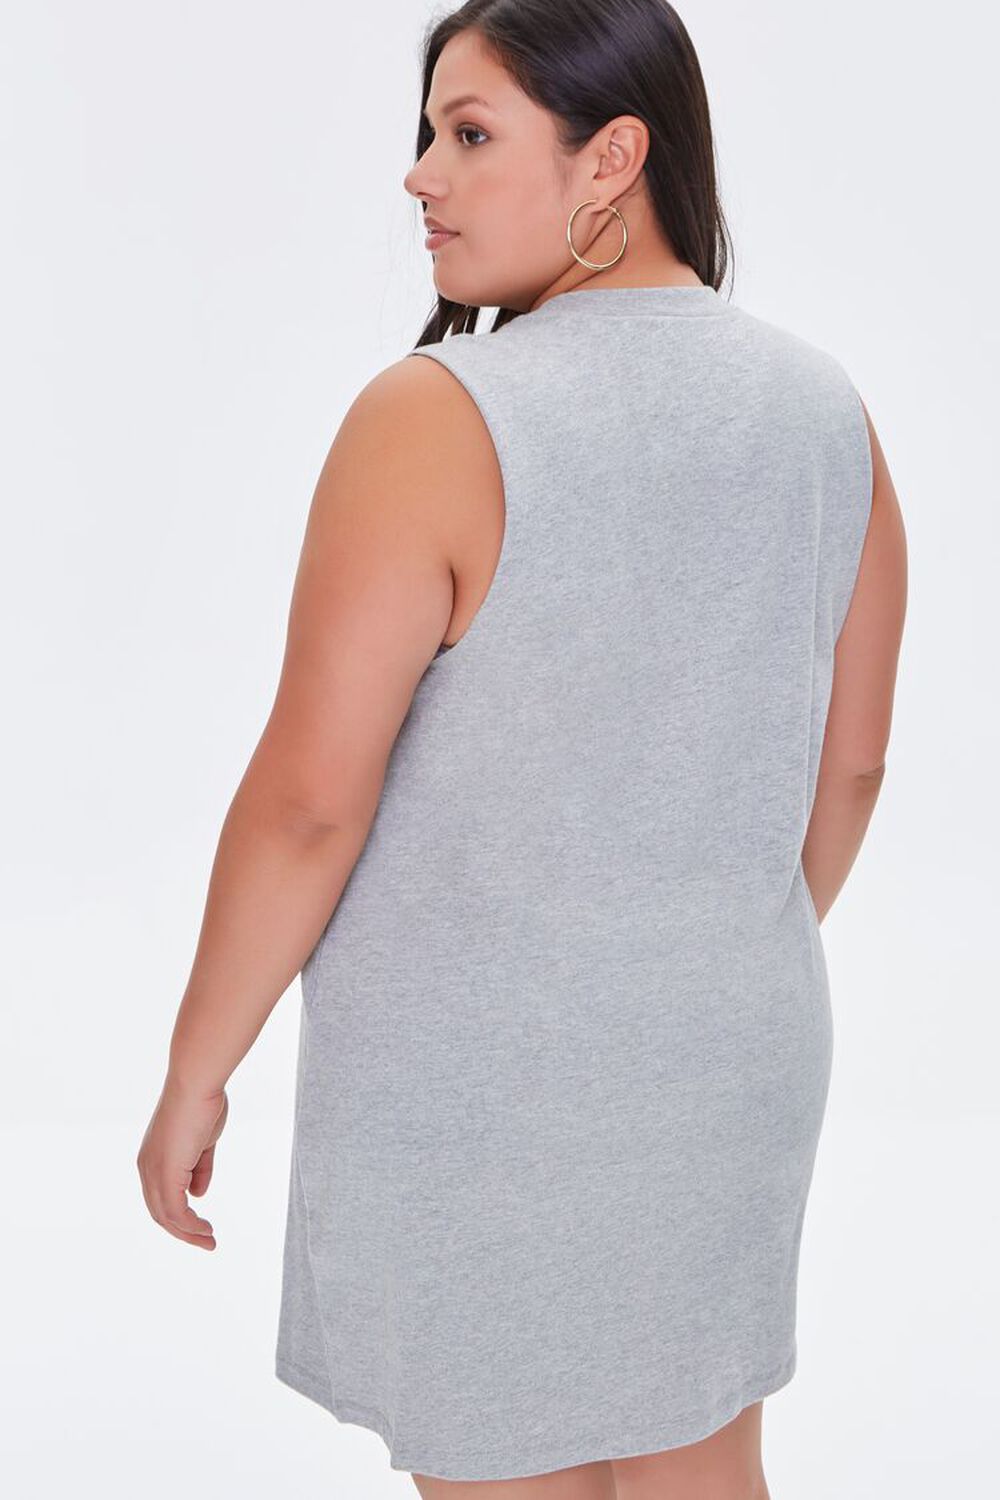 HEATHER GREY Plus Size T-Shirt Mini Dress, image 3